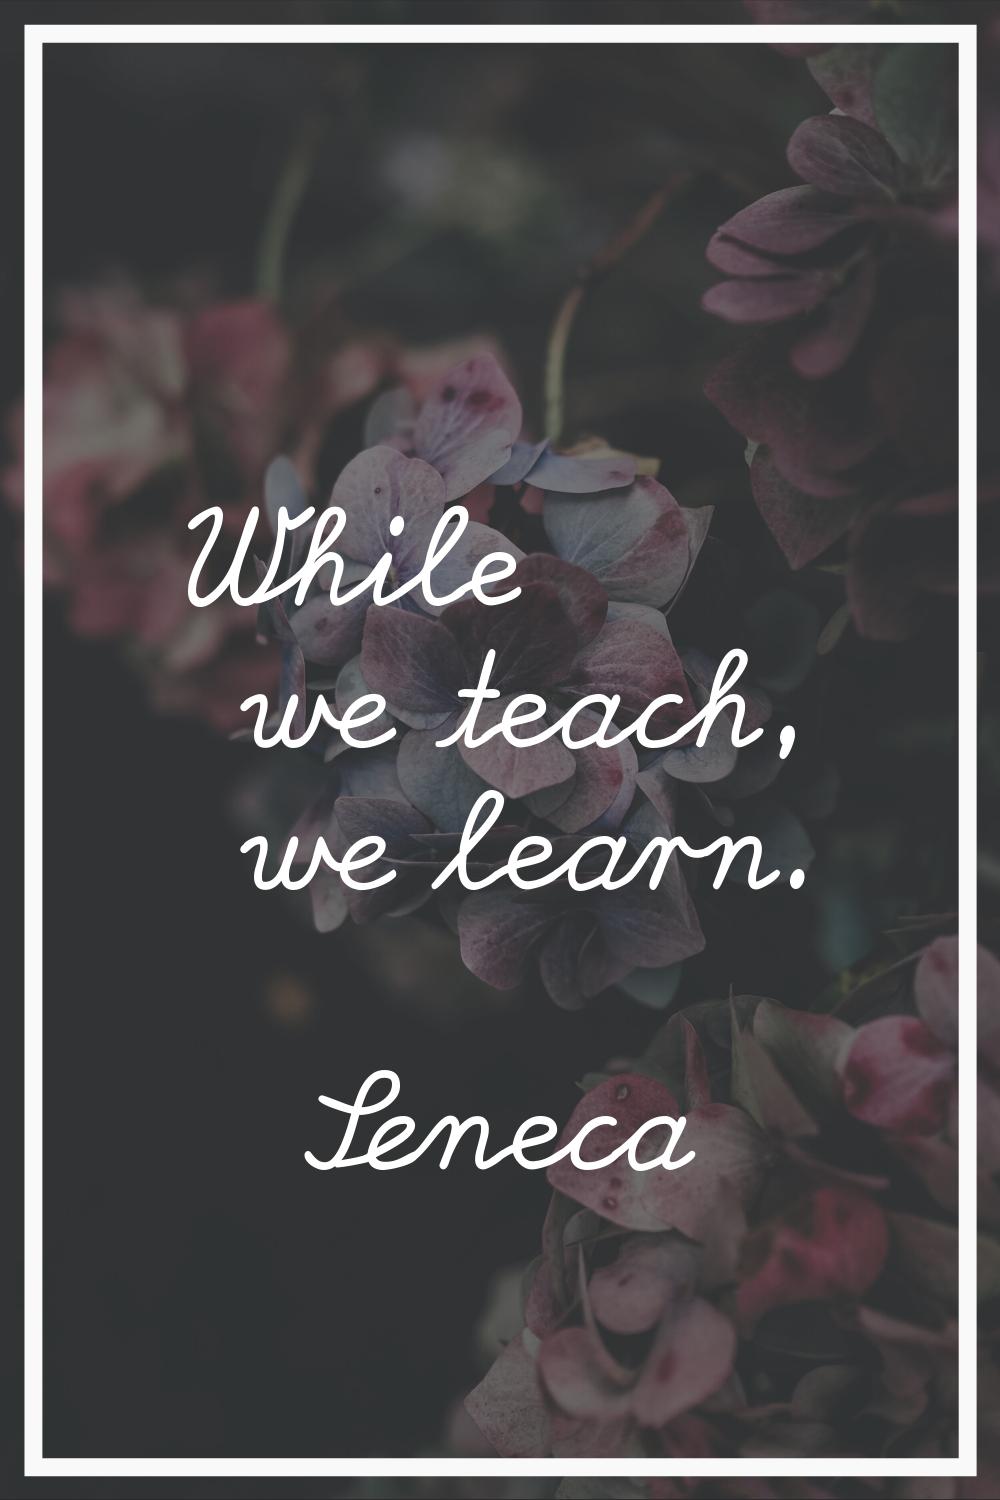 While we teach, we learn.